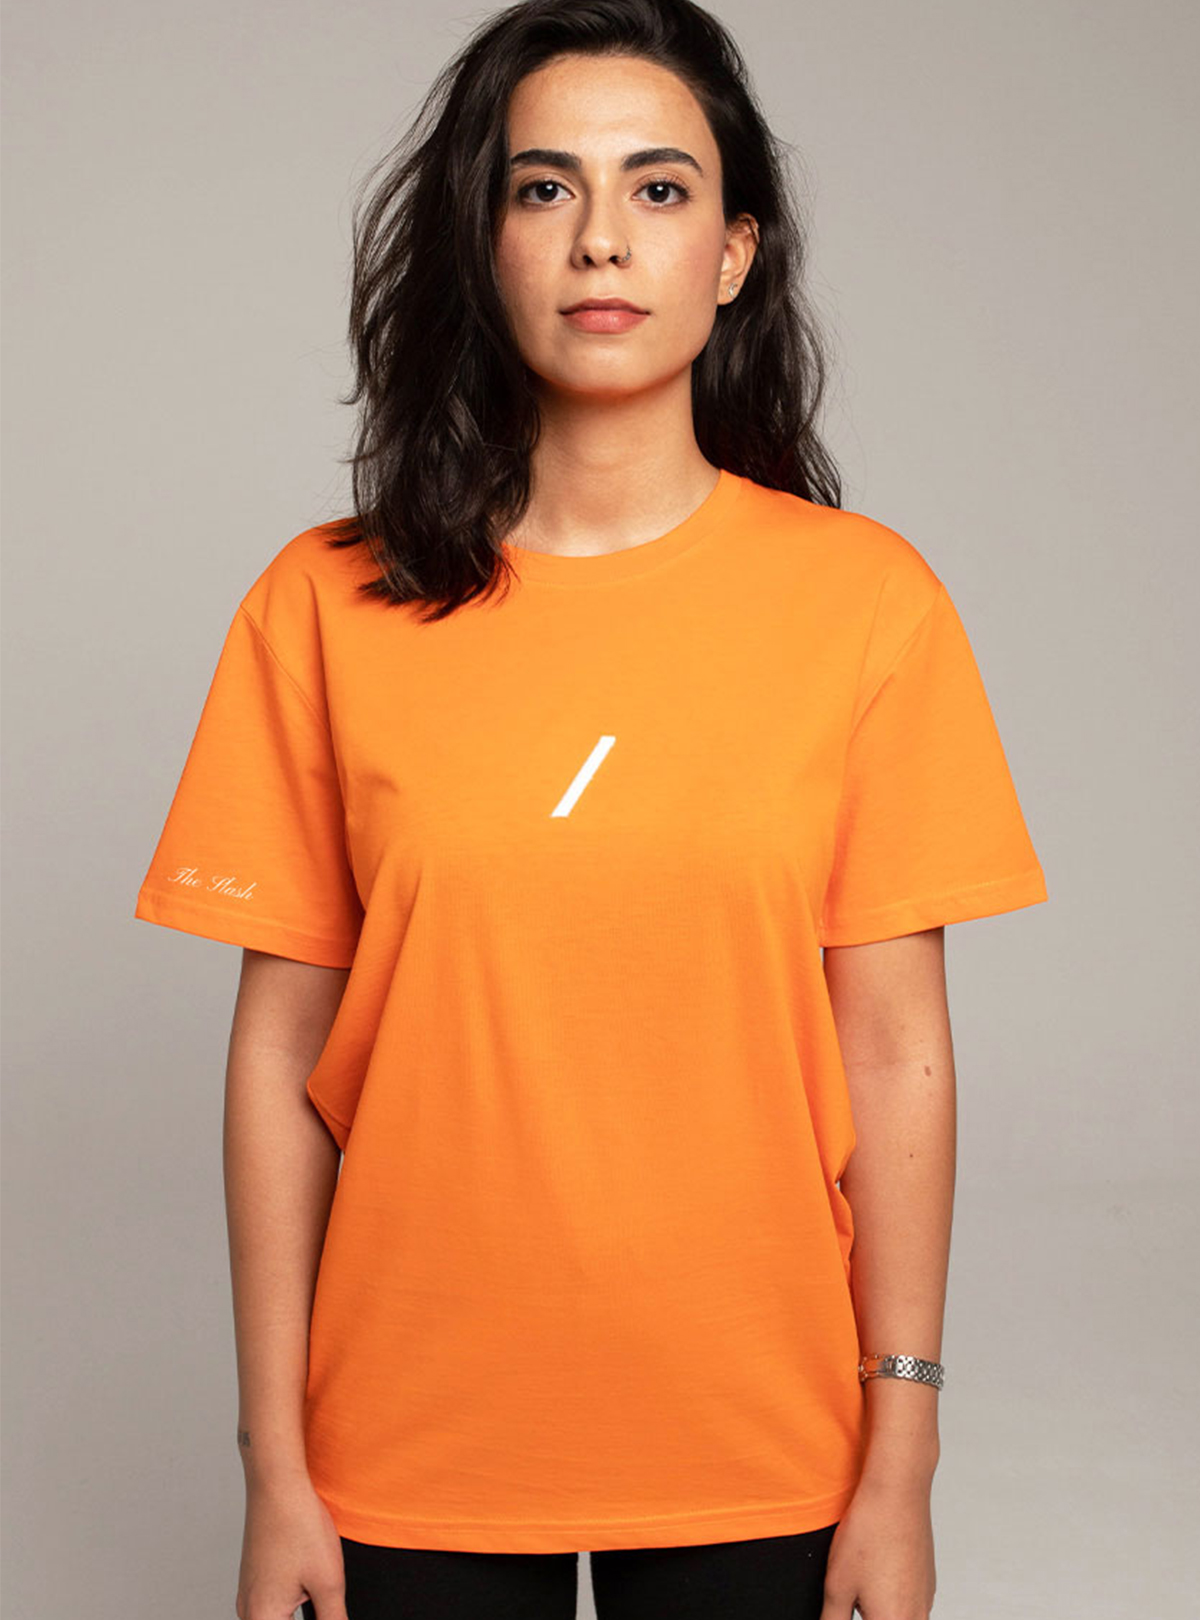 The Basic Collection Kadın - Tshirt Turuncu